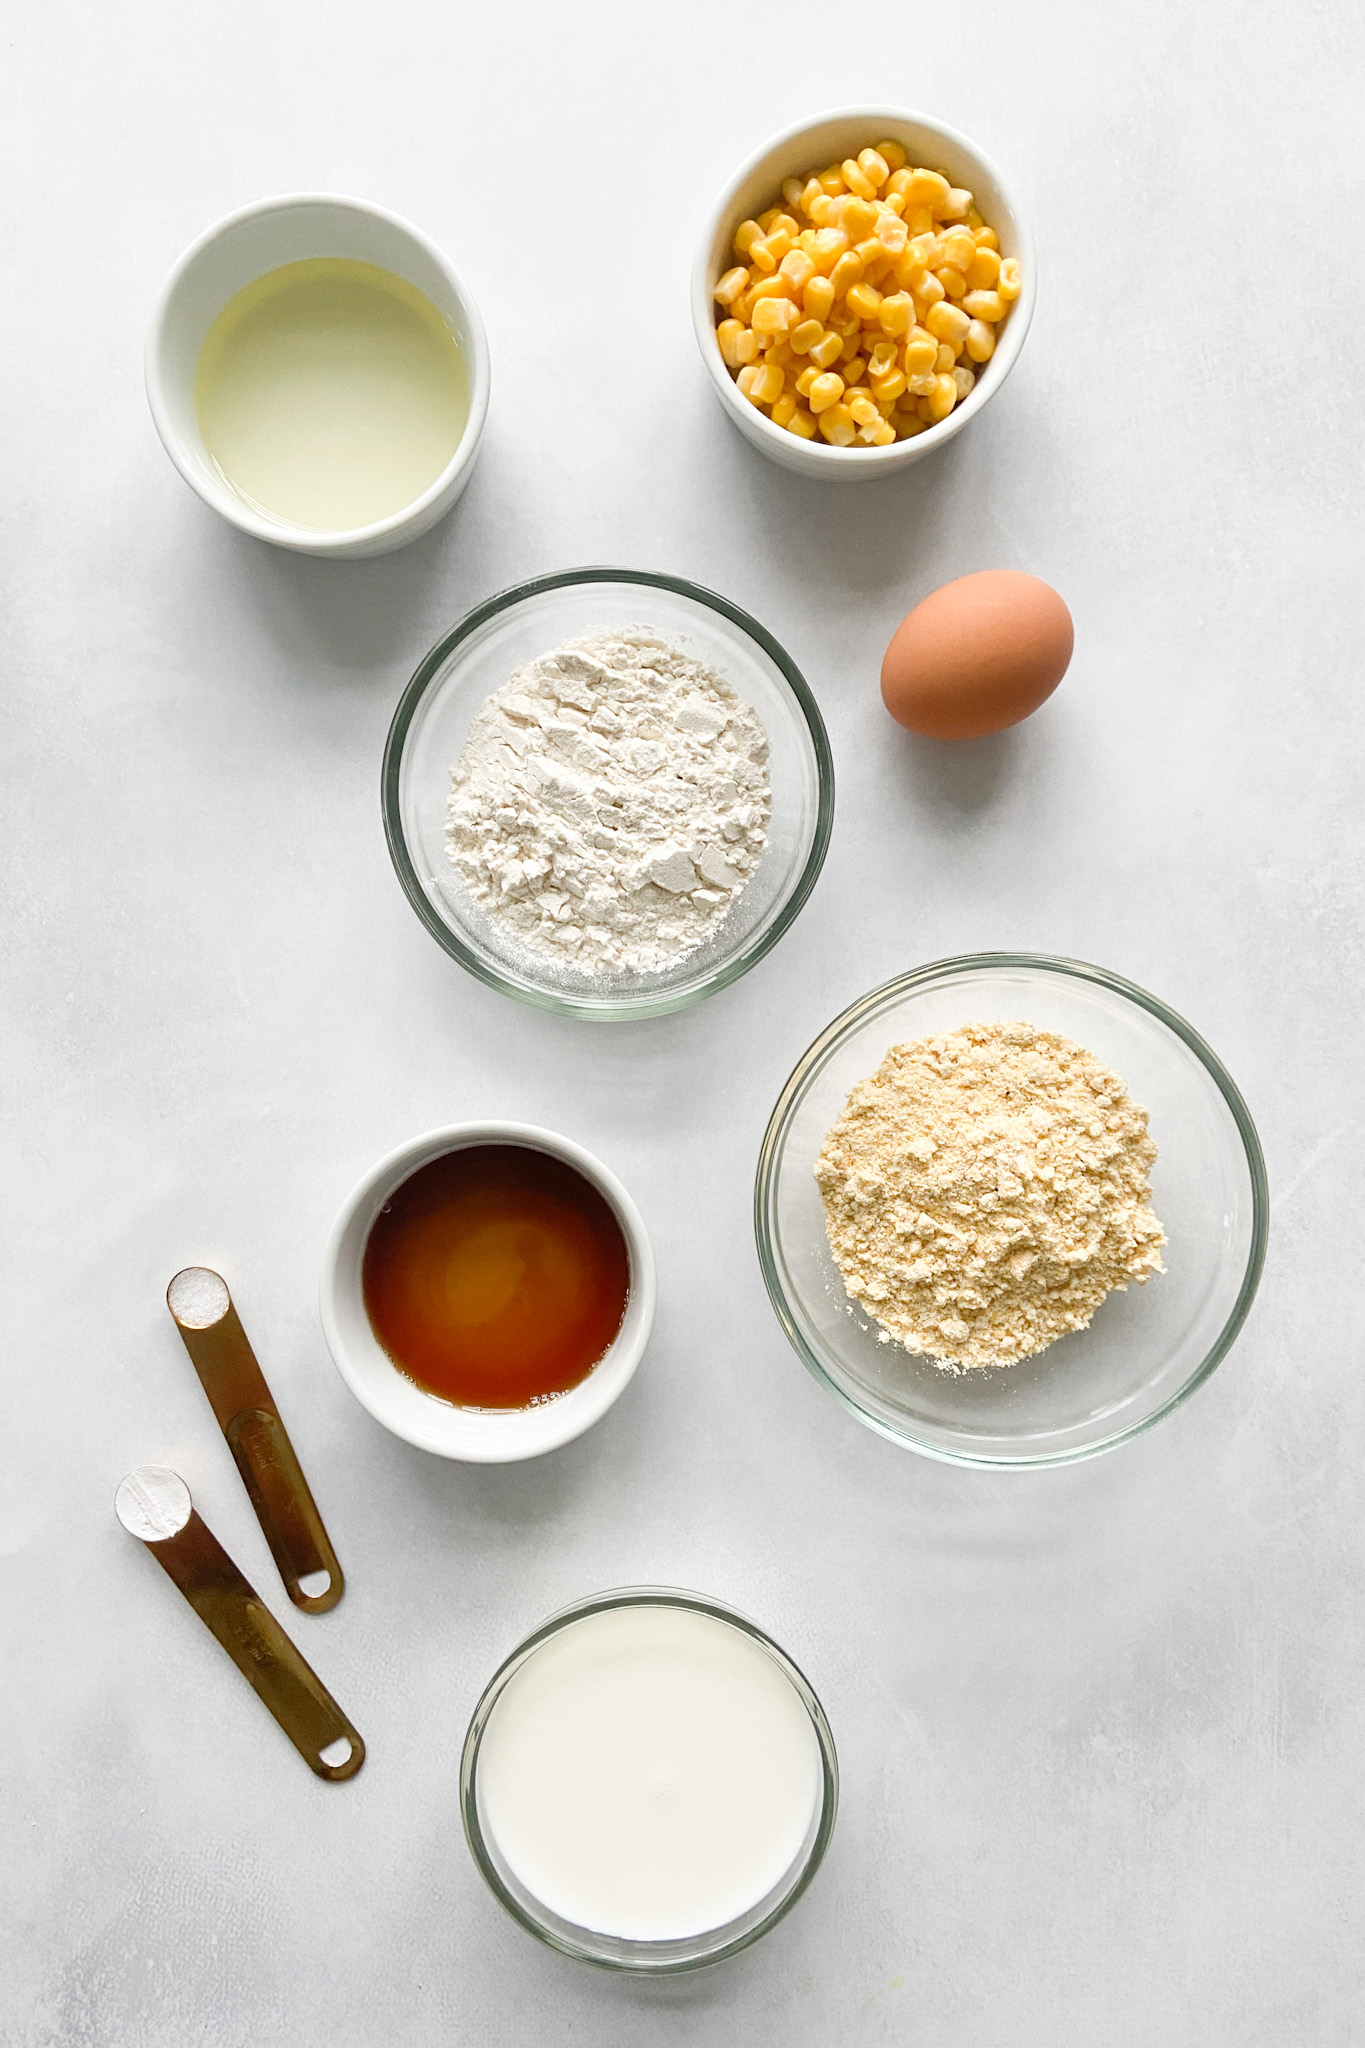 Ingredients to make mini corn muffins